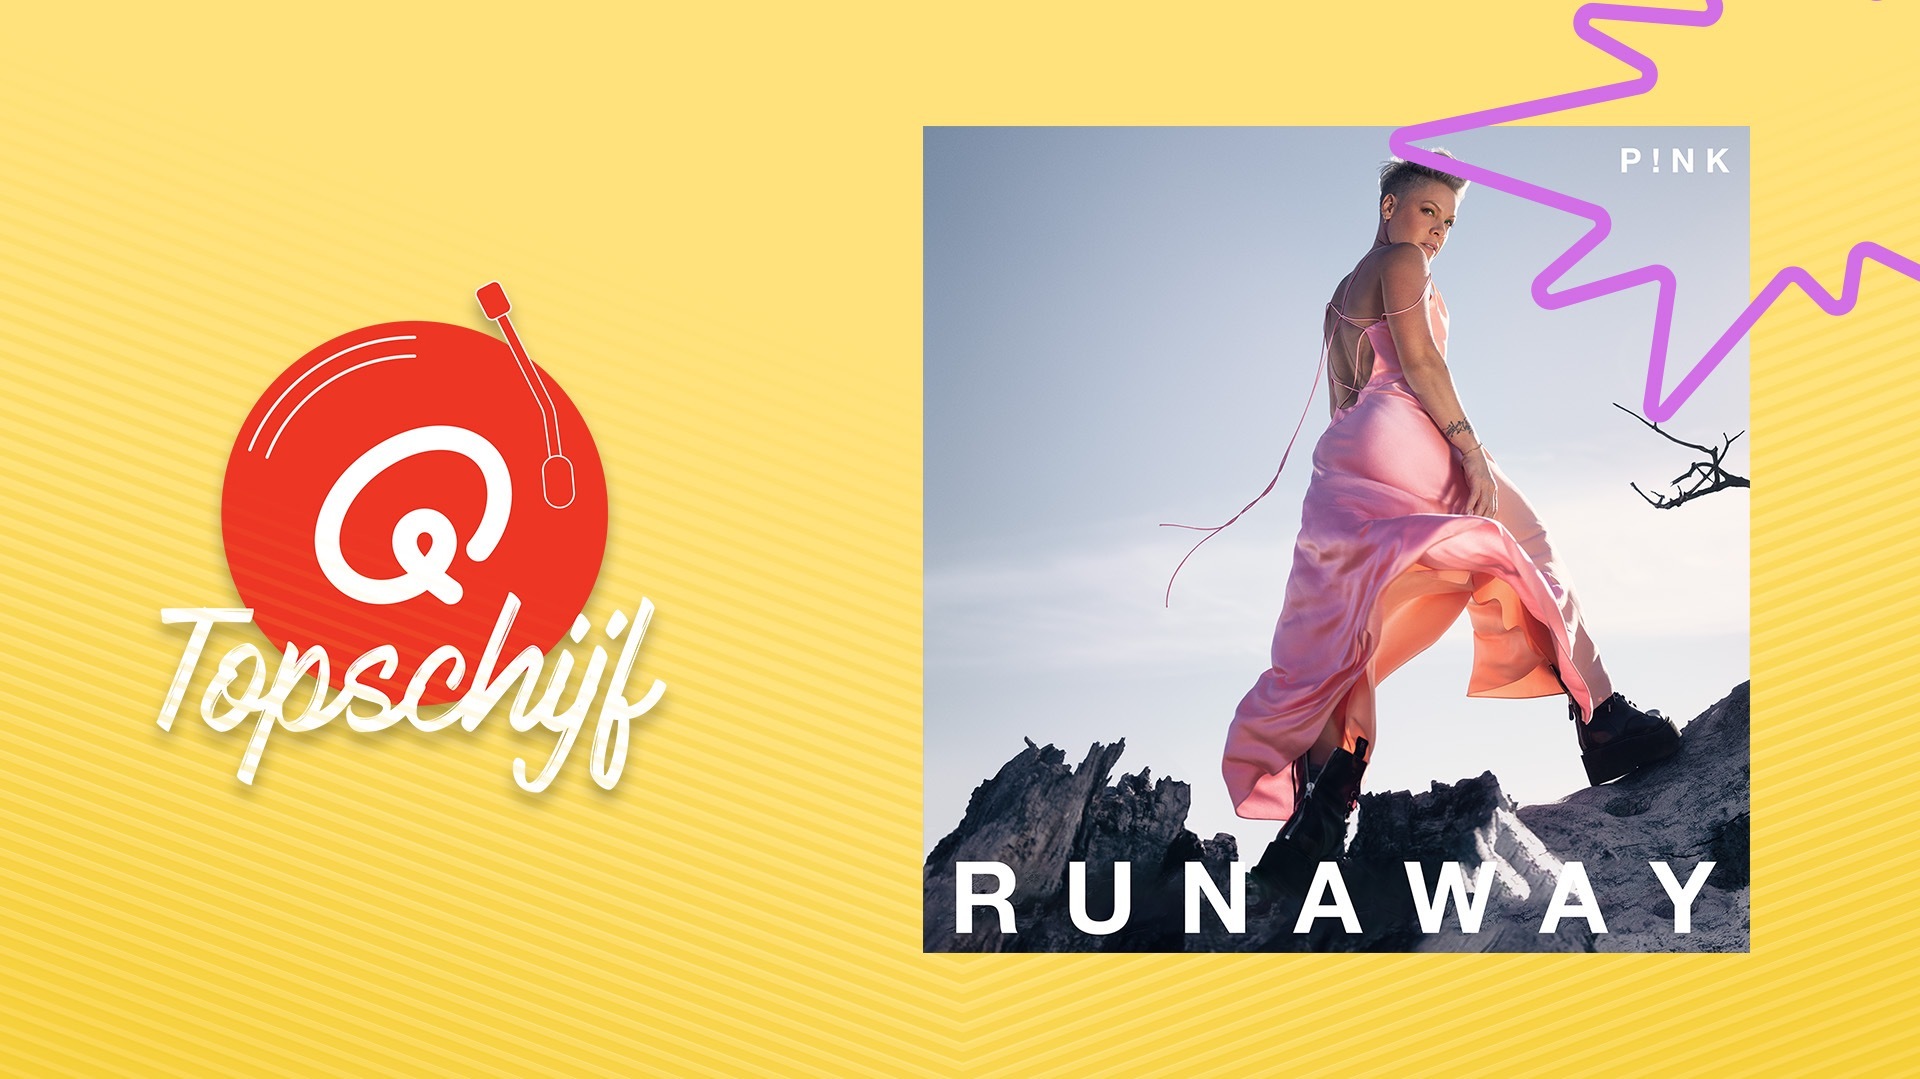 Runaway — P!nk